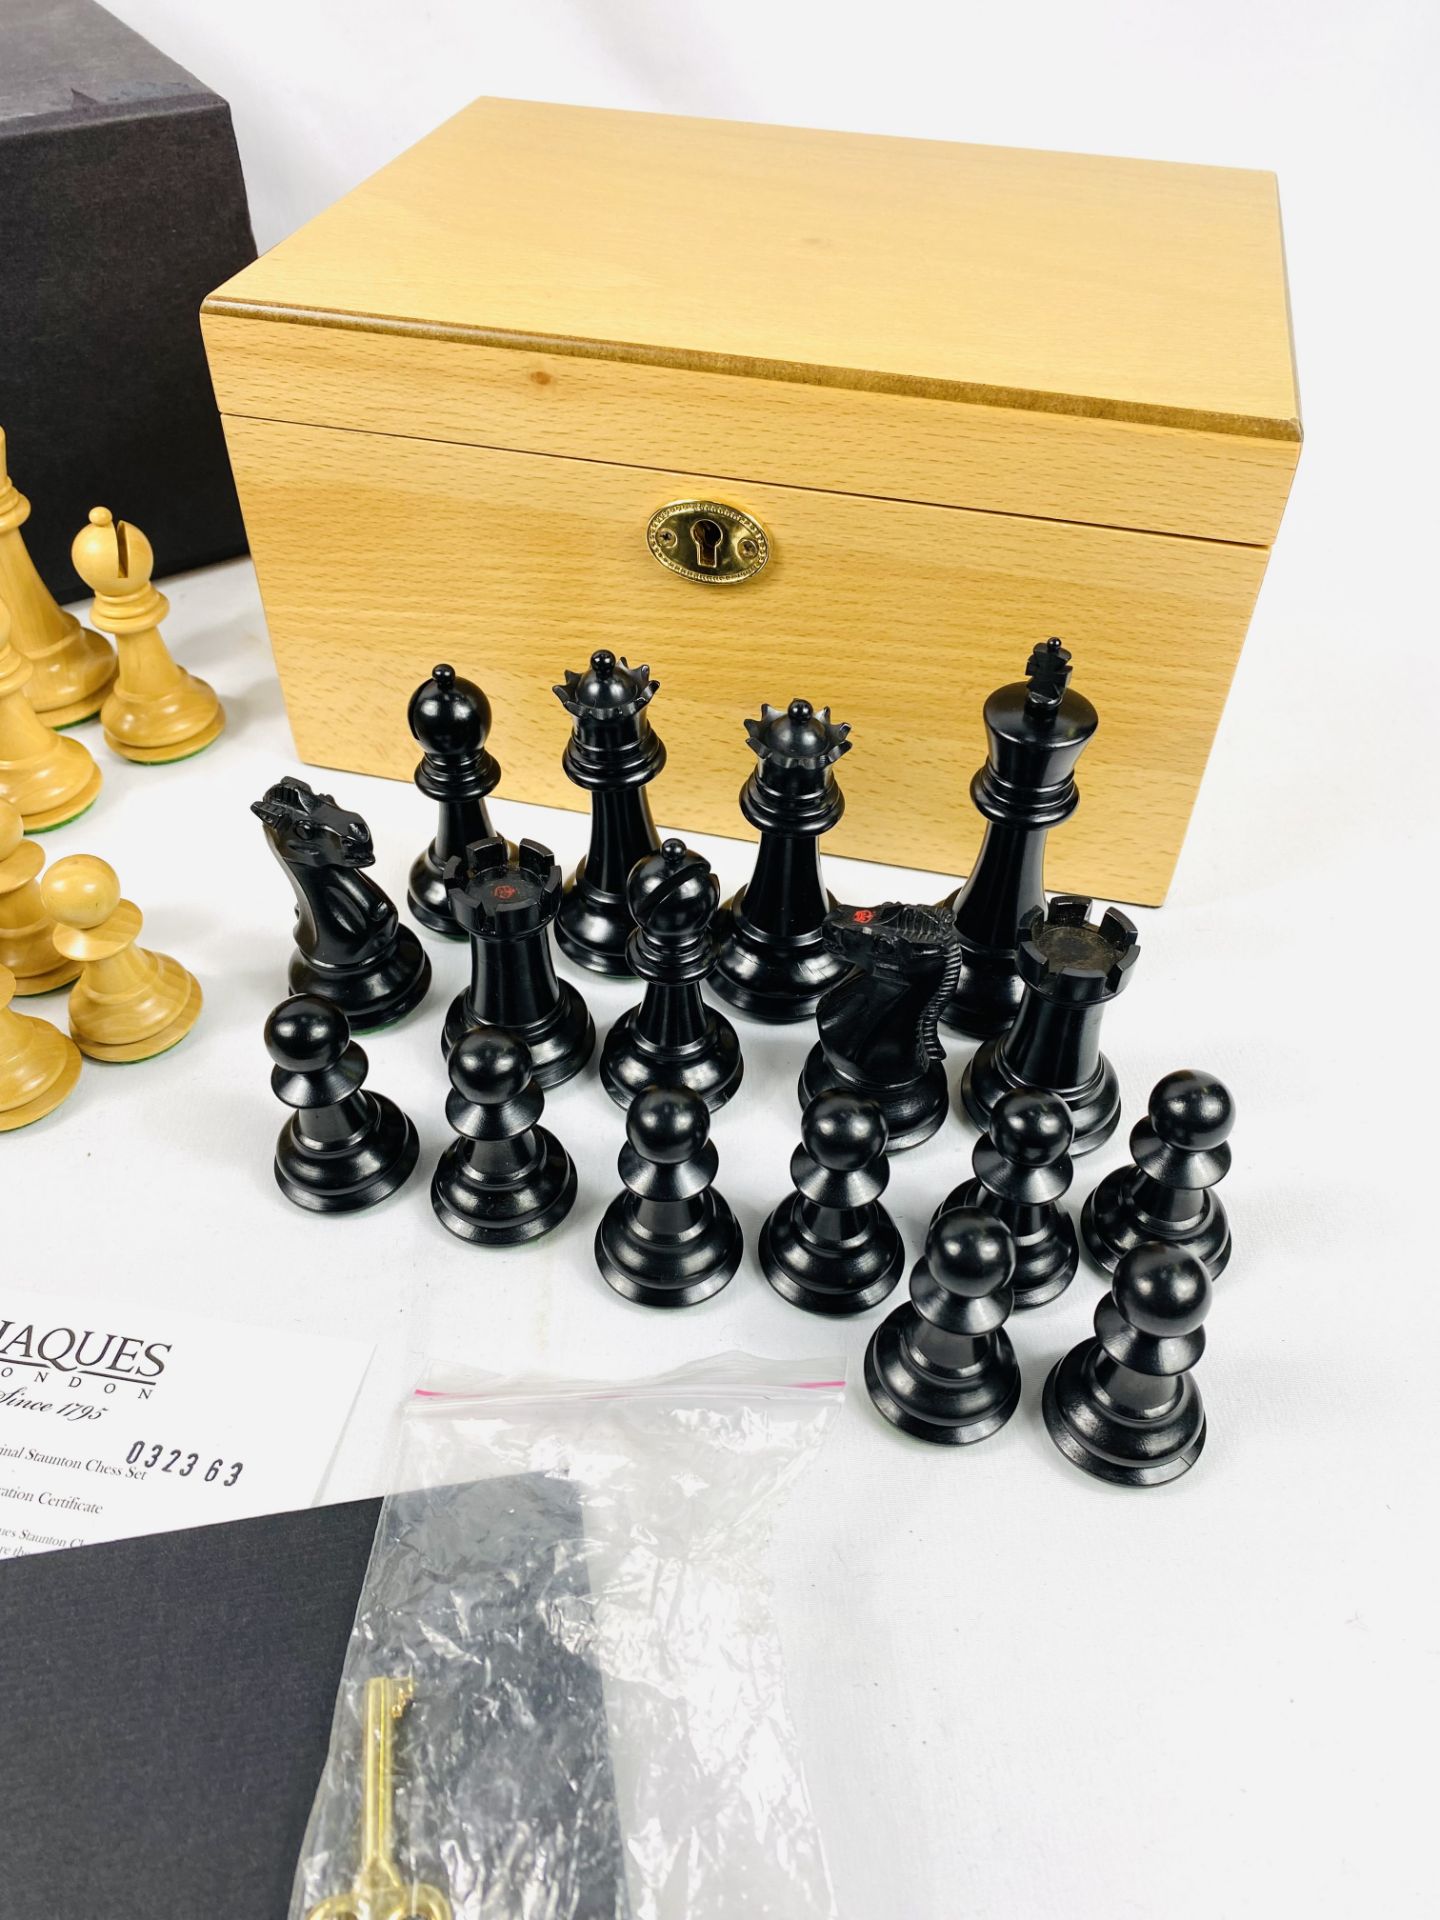 Jaques Staunton chess set - Image 2 of 6